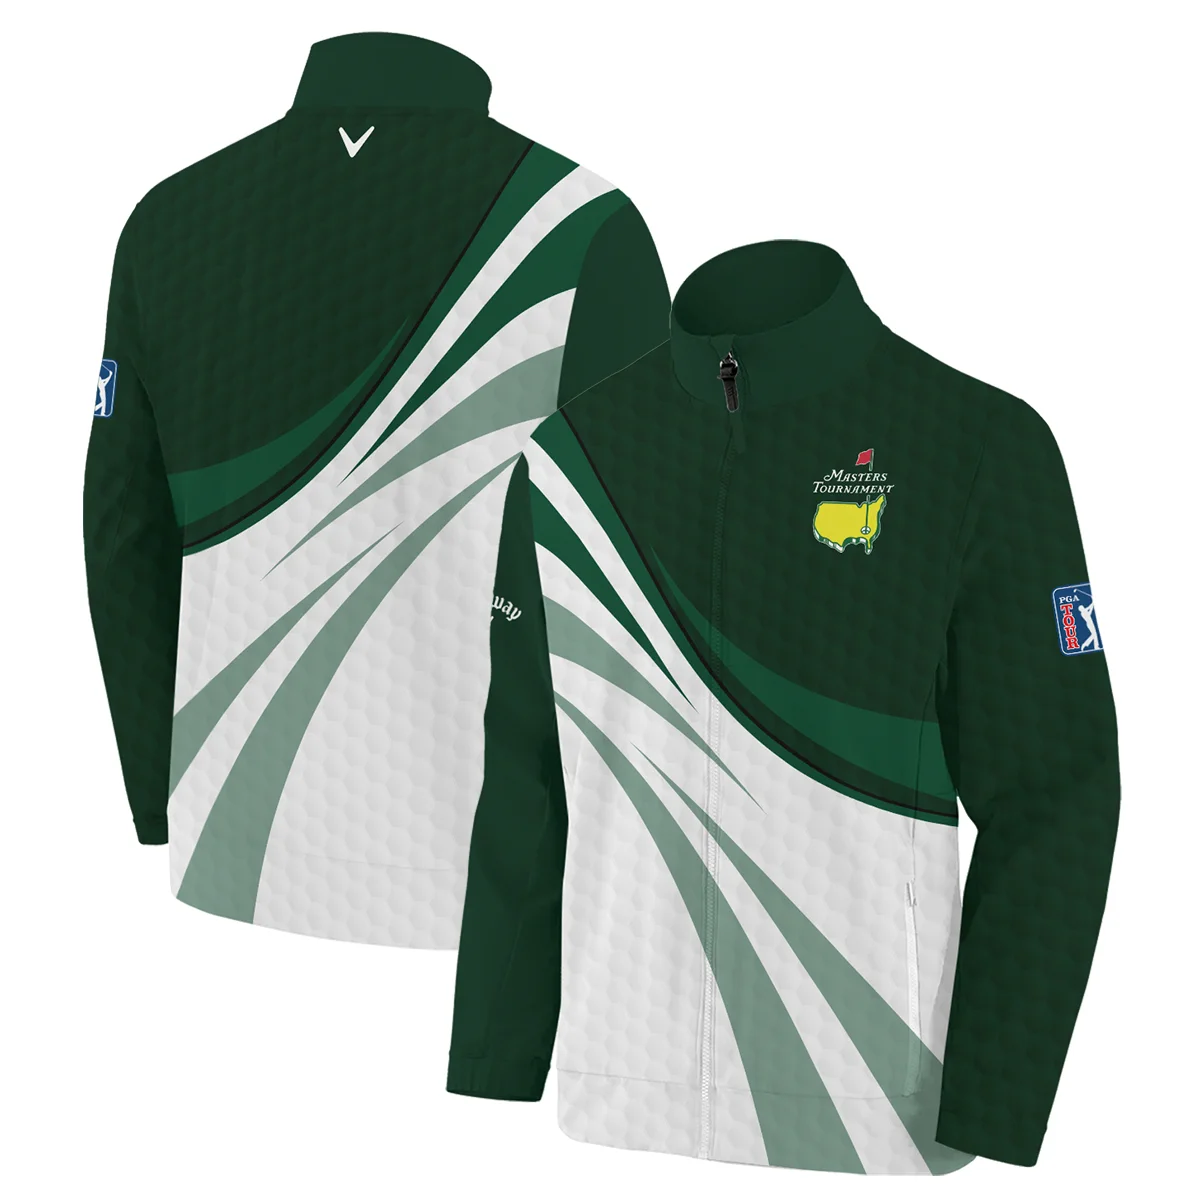 Golf Sport Masters Tournament Callaway Sleeveless Jacket Green Color Sports Golf Ball Pattern All Over Print Sleeveless Jacket